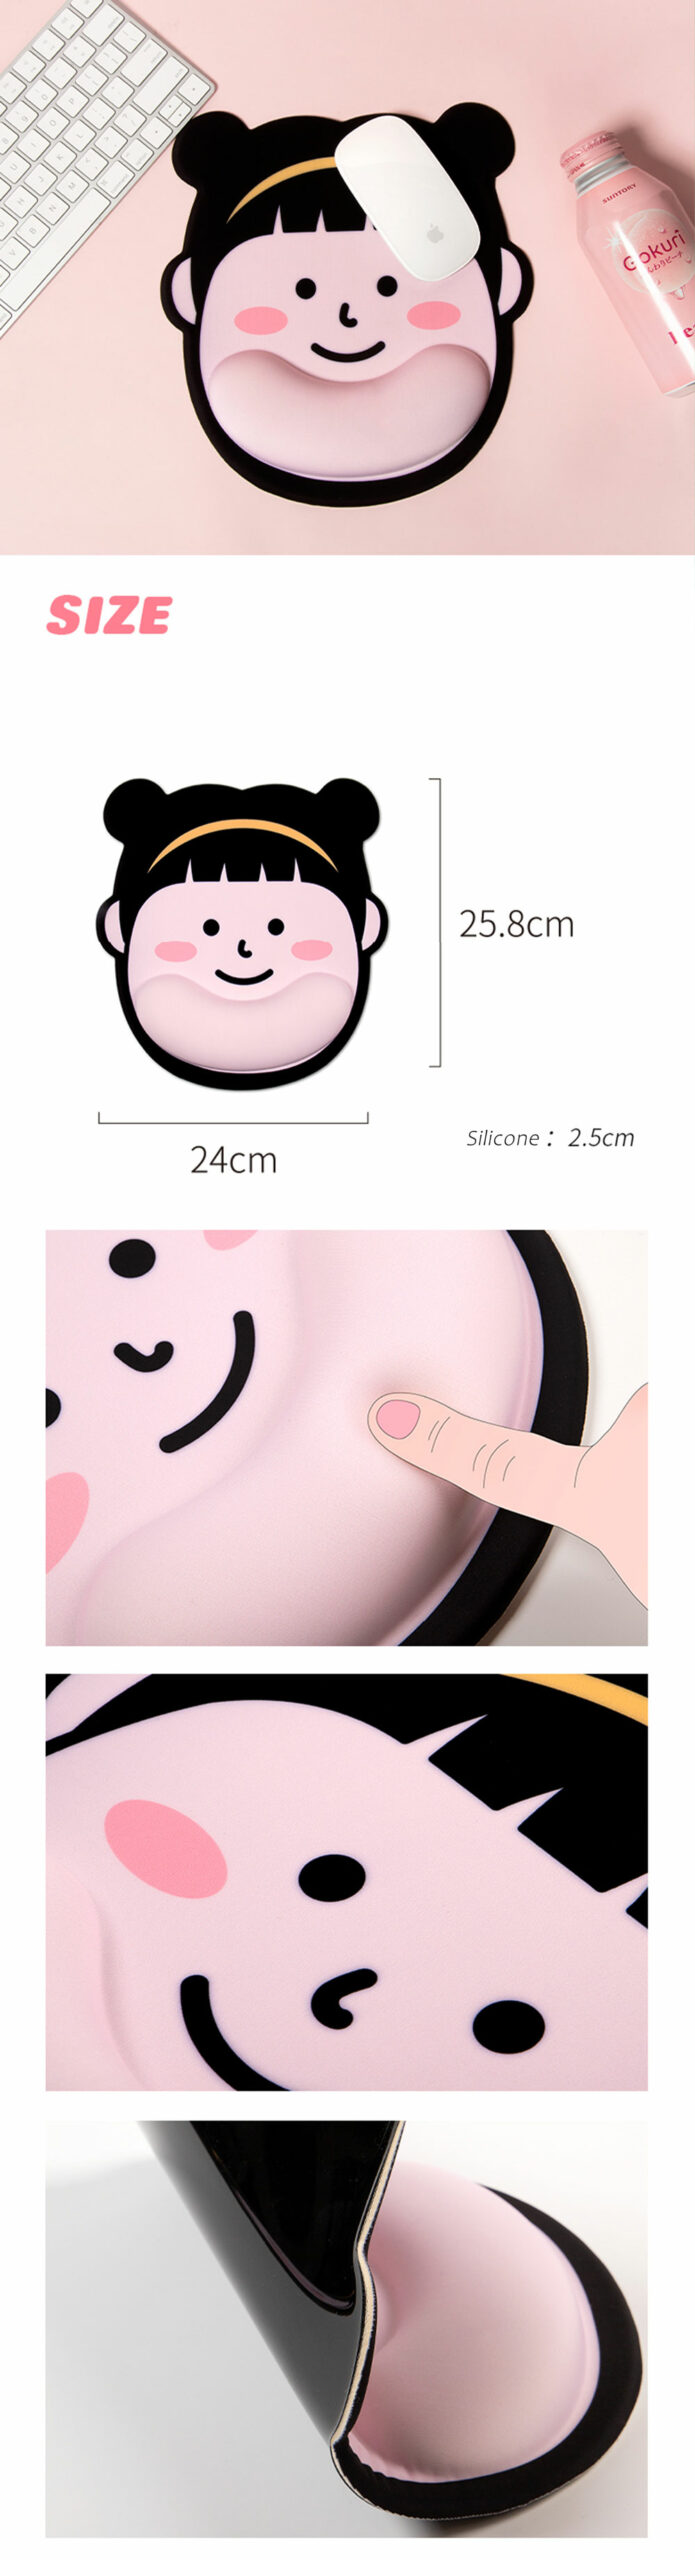 Cute 3D Mouse Pad Product Details 5